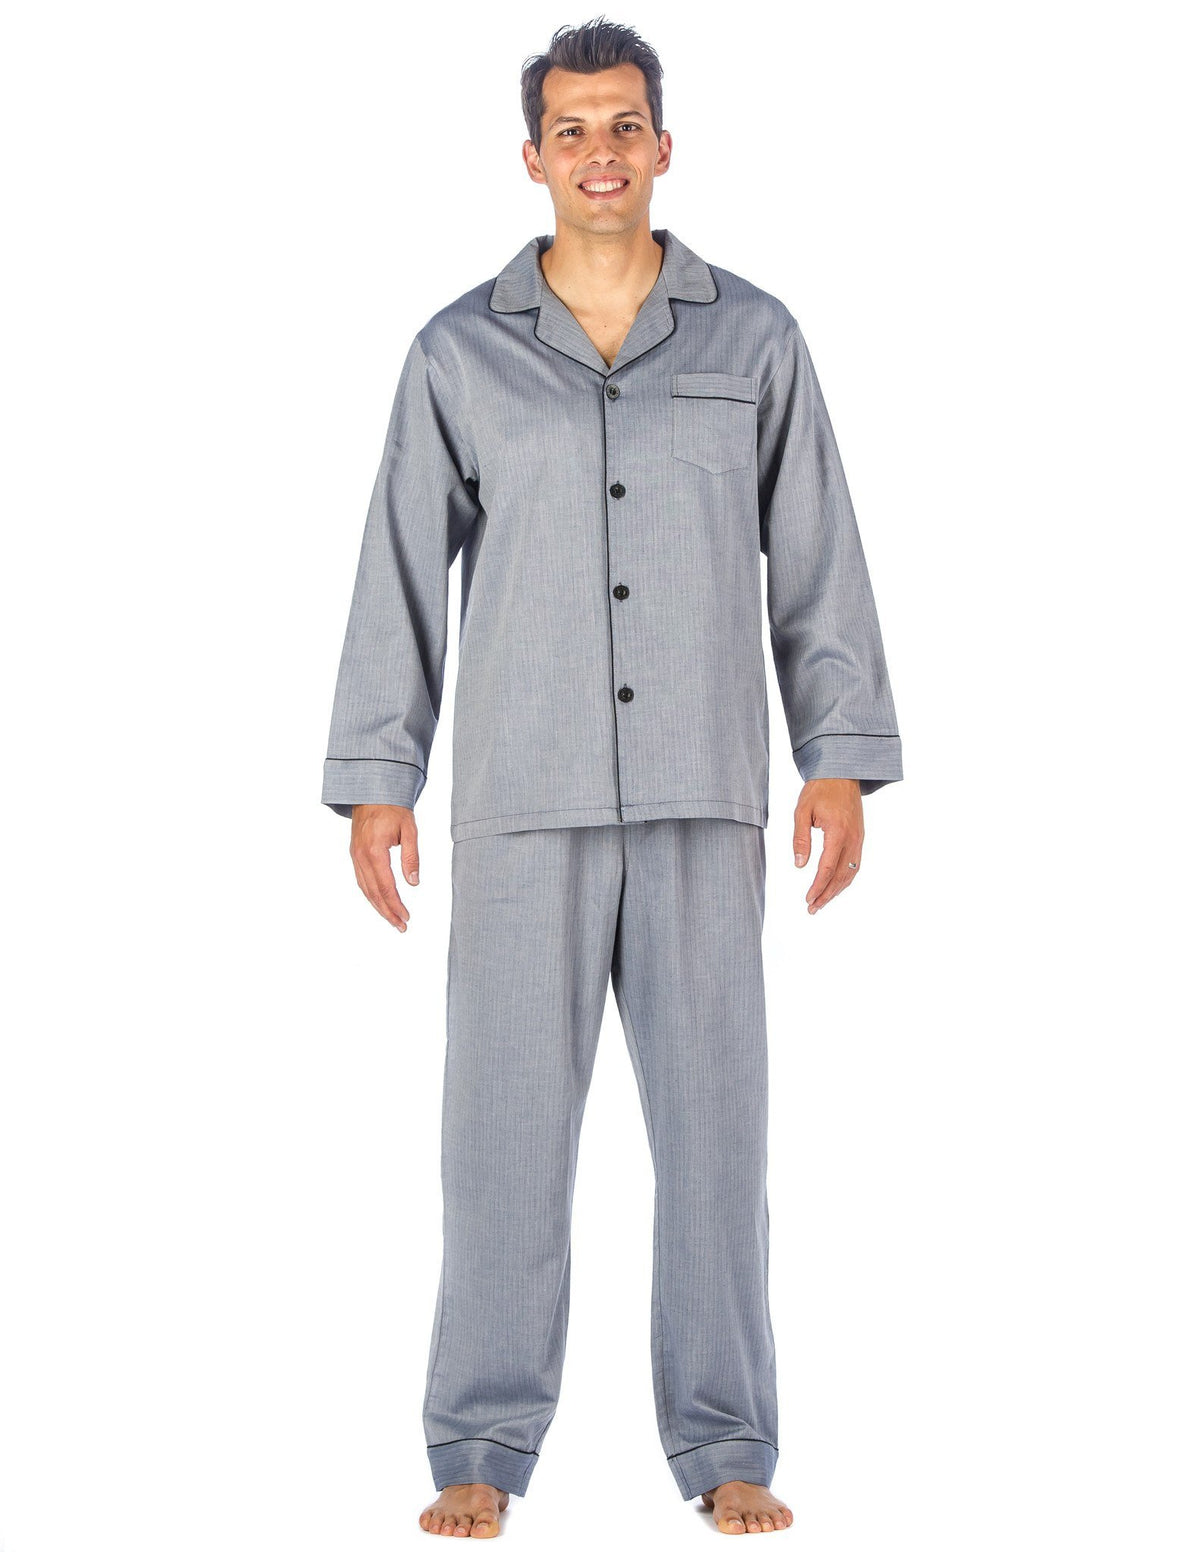 Mens Premium 100% Cotton Woven Pajama Sleepwear Set - Grey Herringbone